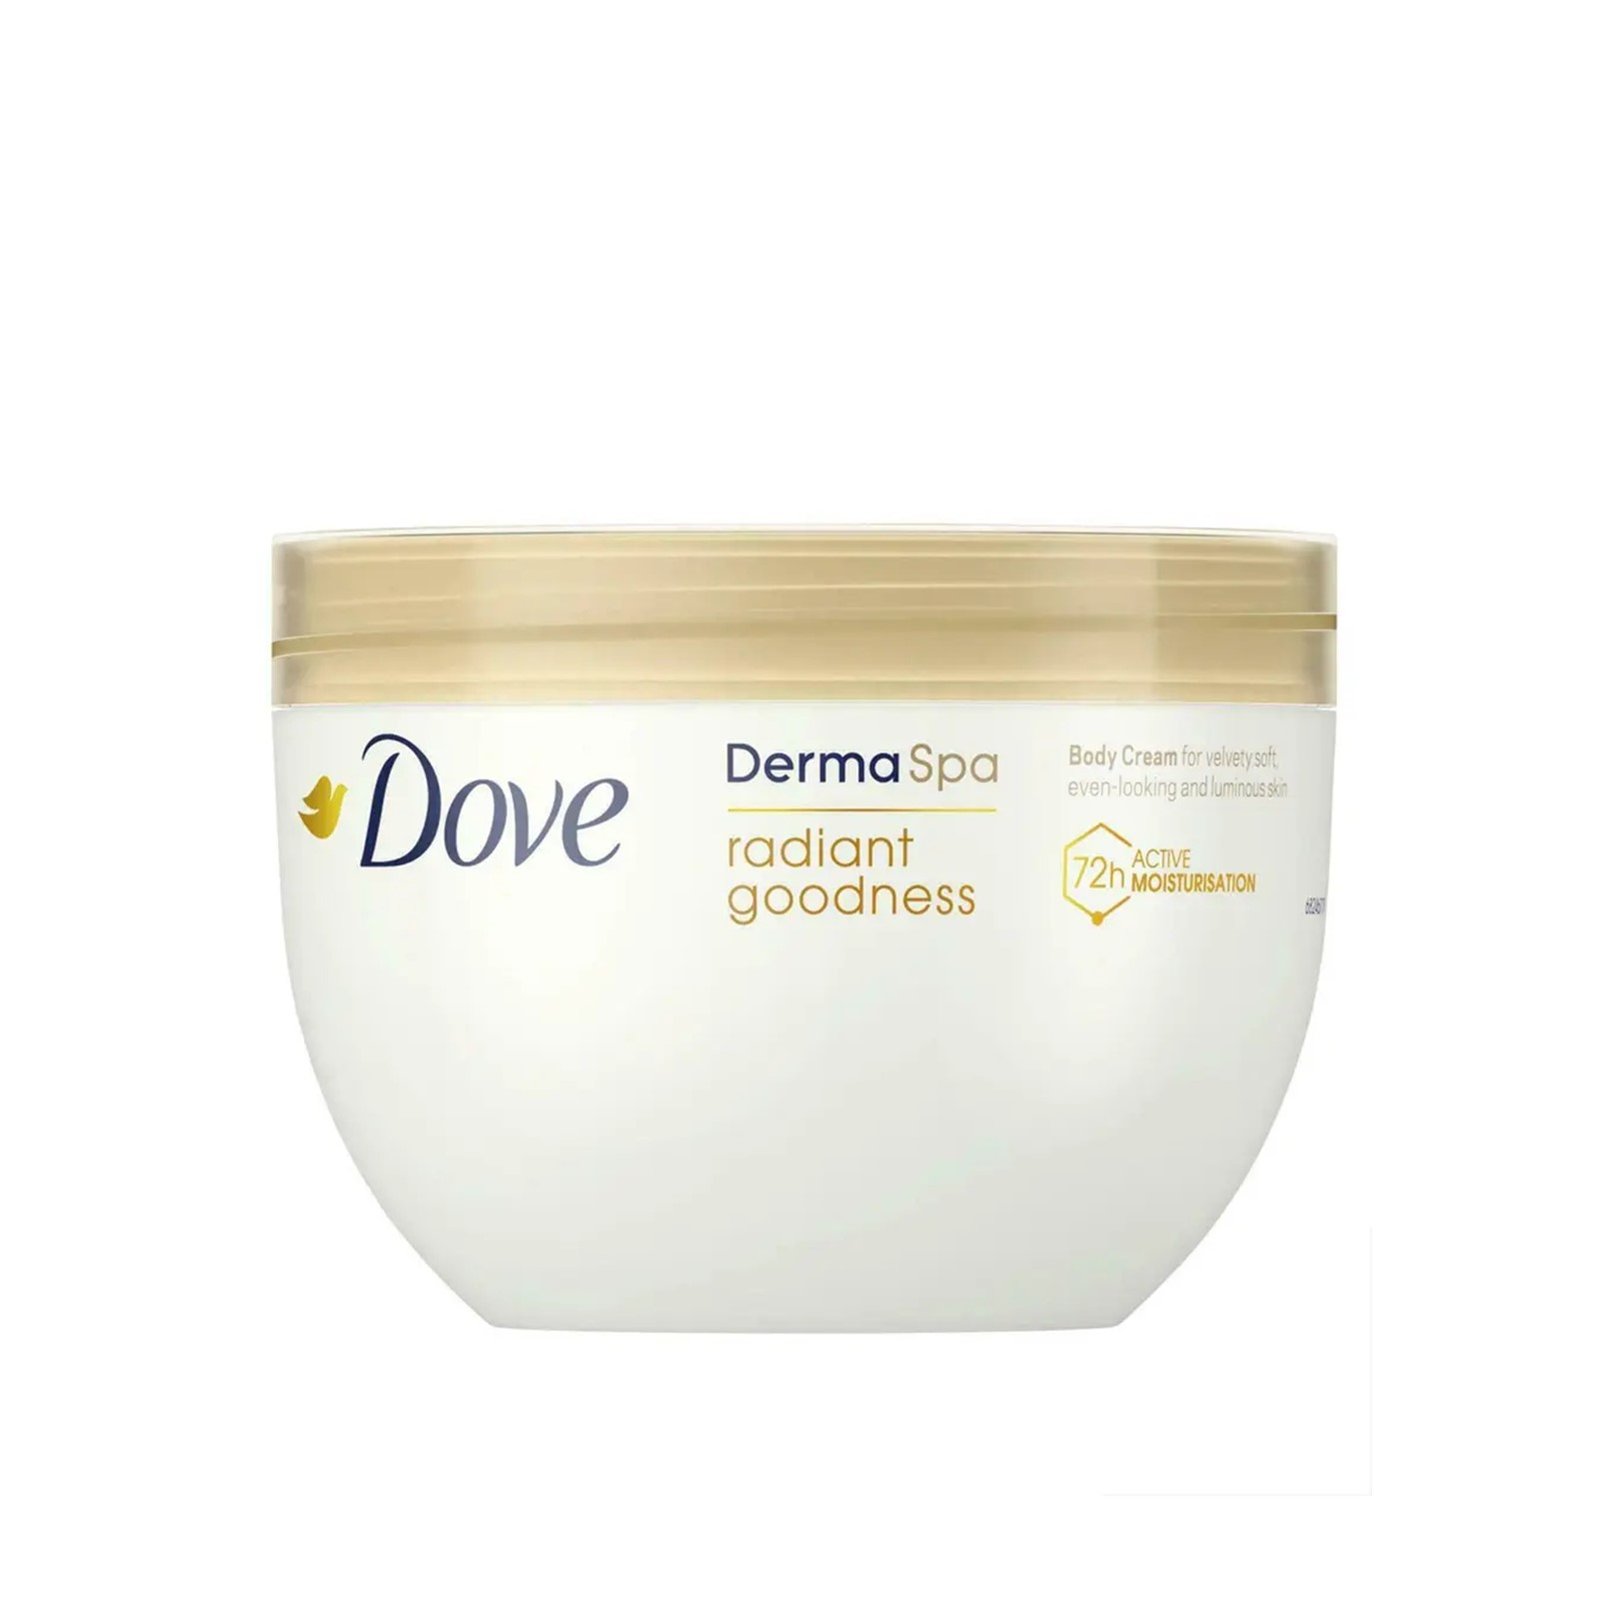 Dove Derma Spa Radiant Goodness Body Cream 300ml (10.14floz)